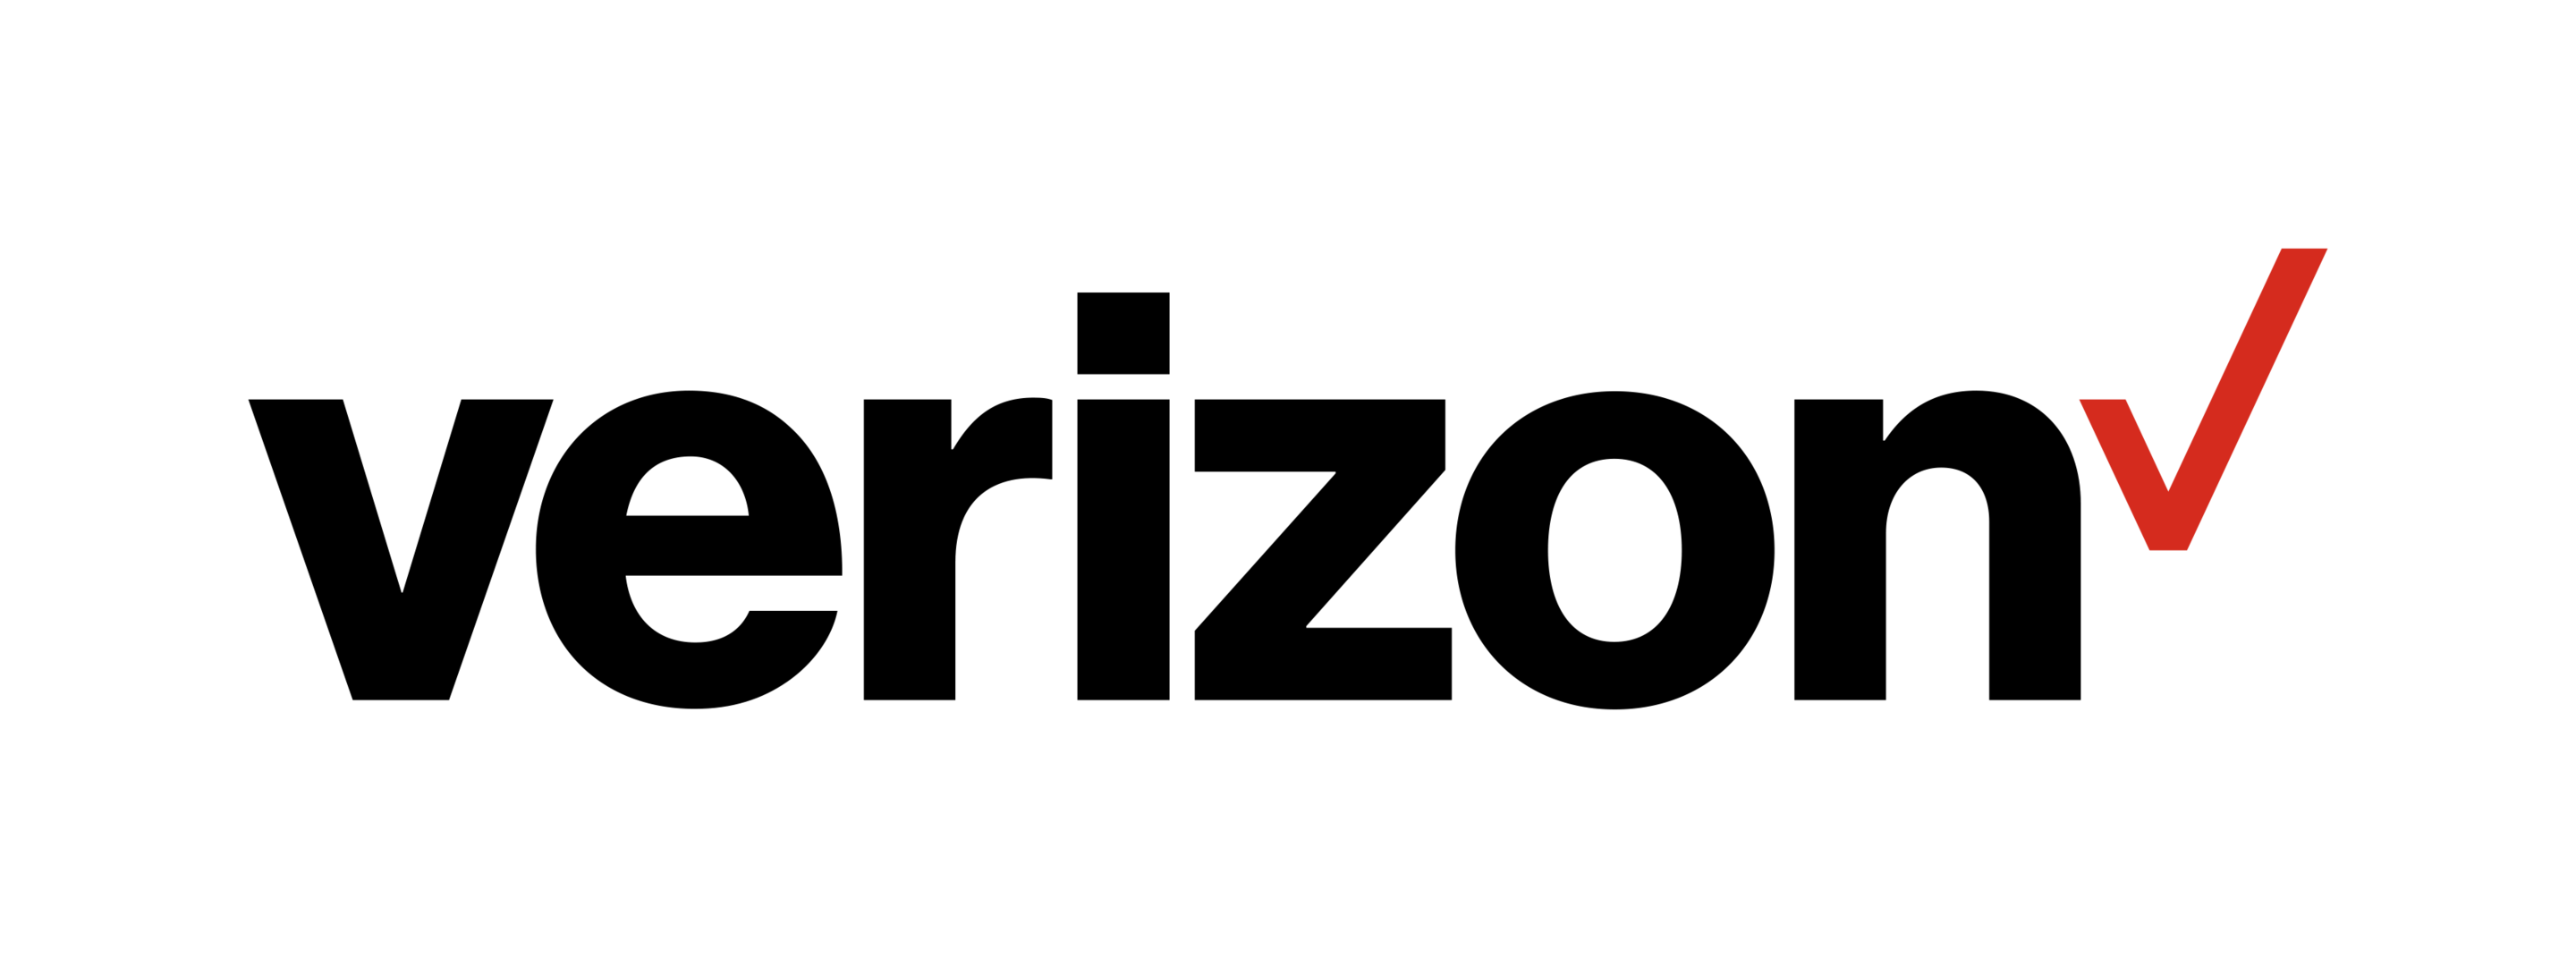 GL-Logo-Verizon.png